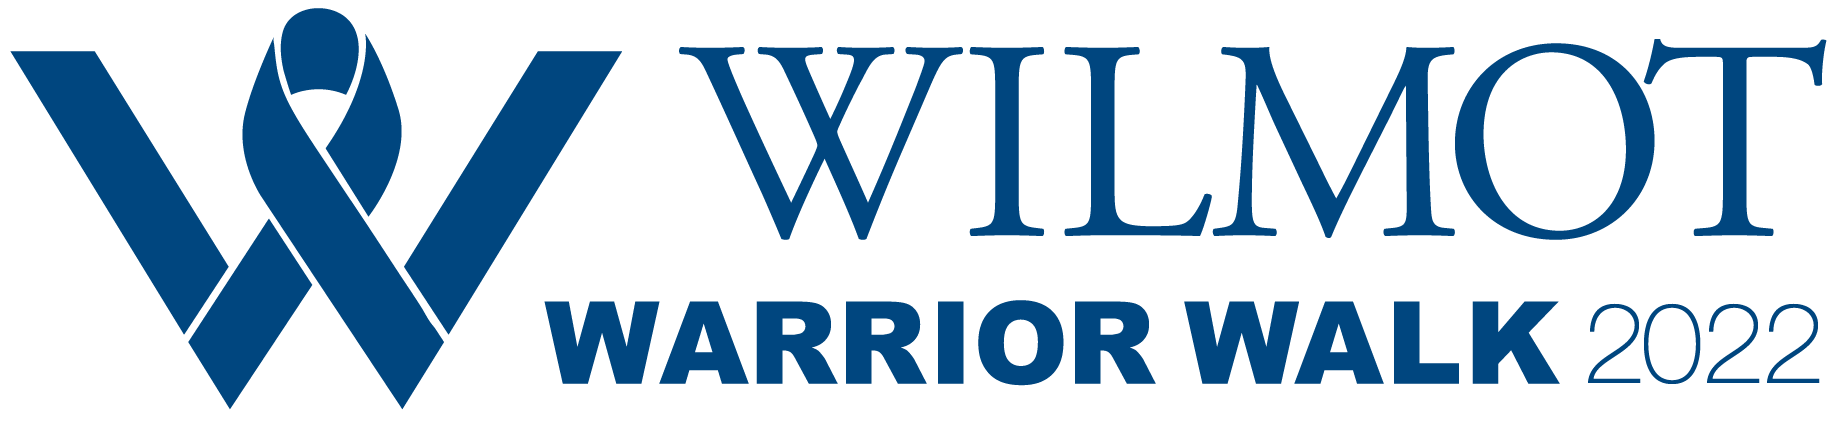 Warrior Walk word mark logo 2022